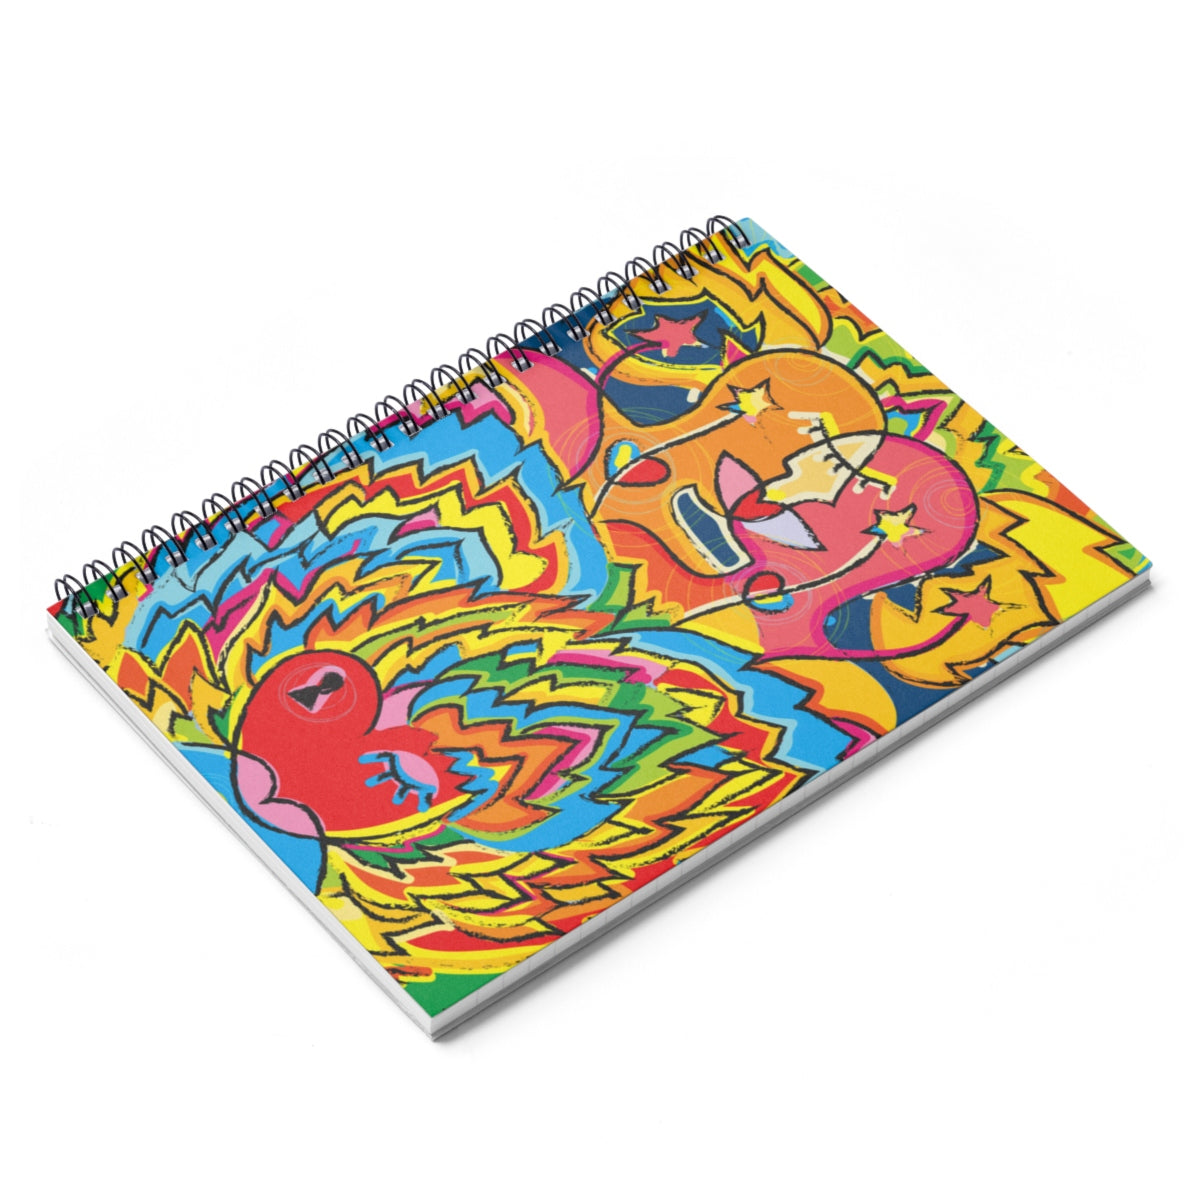 Spiral Notebook - Ruled Line - Happyboca